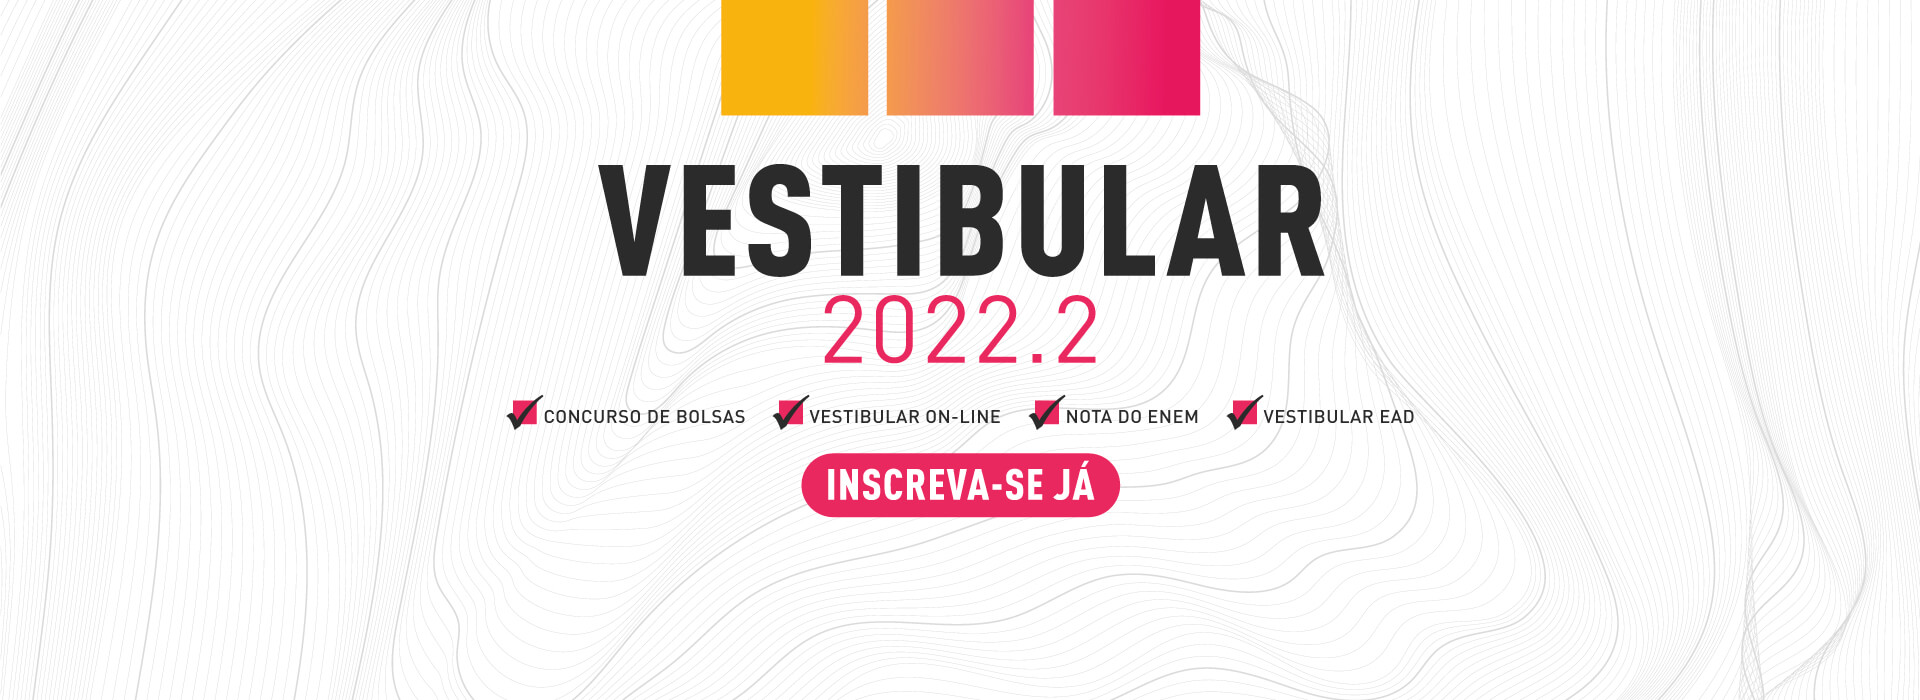 Vestibular Top Cursos 2022.2